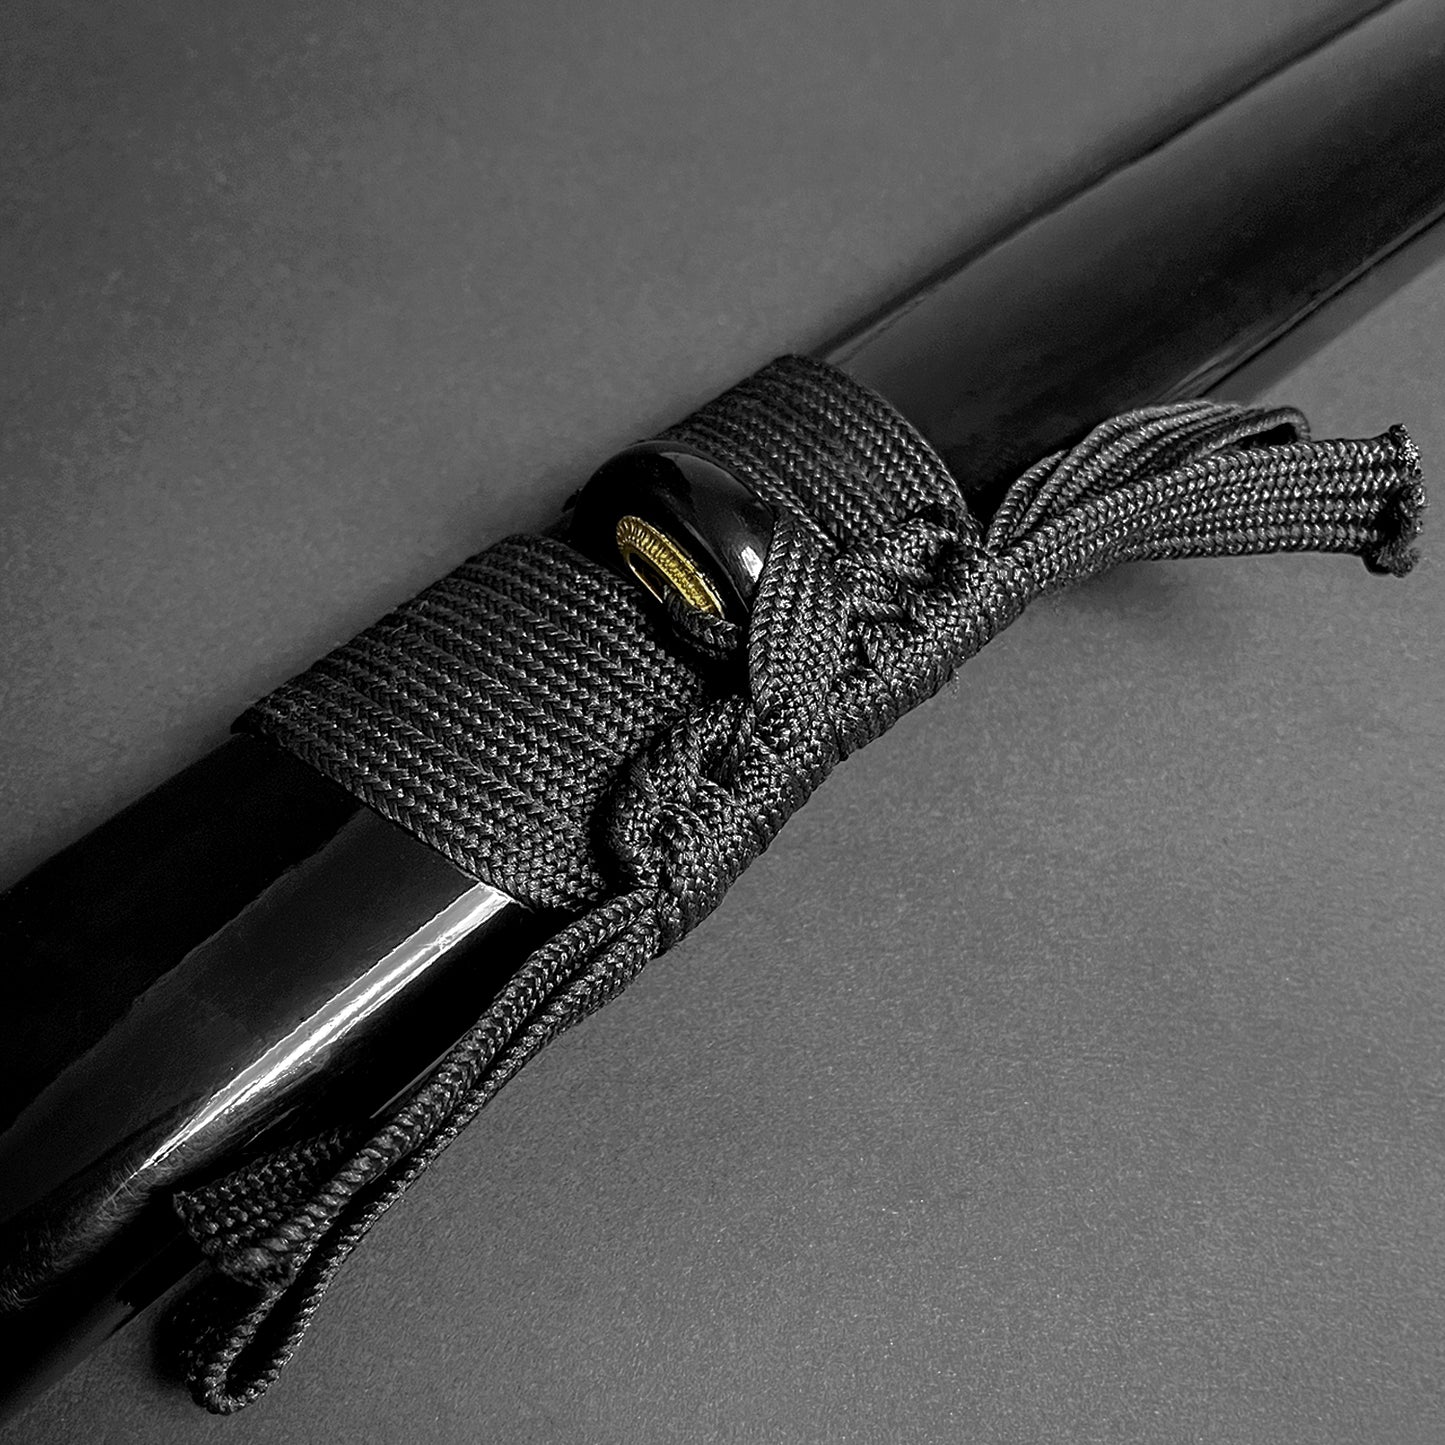 Musha 40 1/2" Hand Forged "Chushingura" Sword